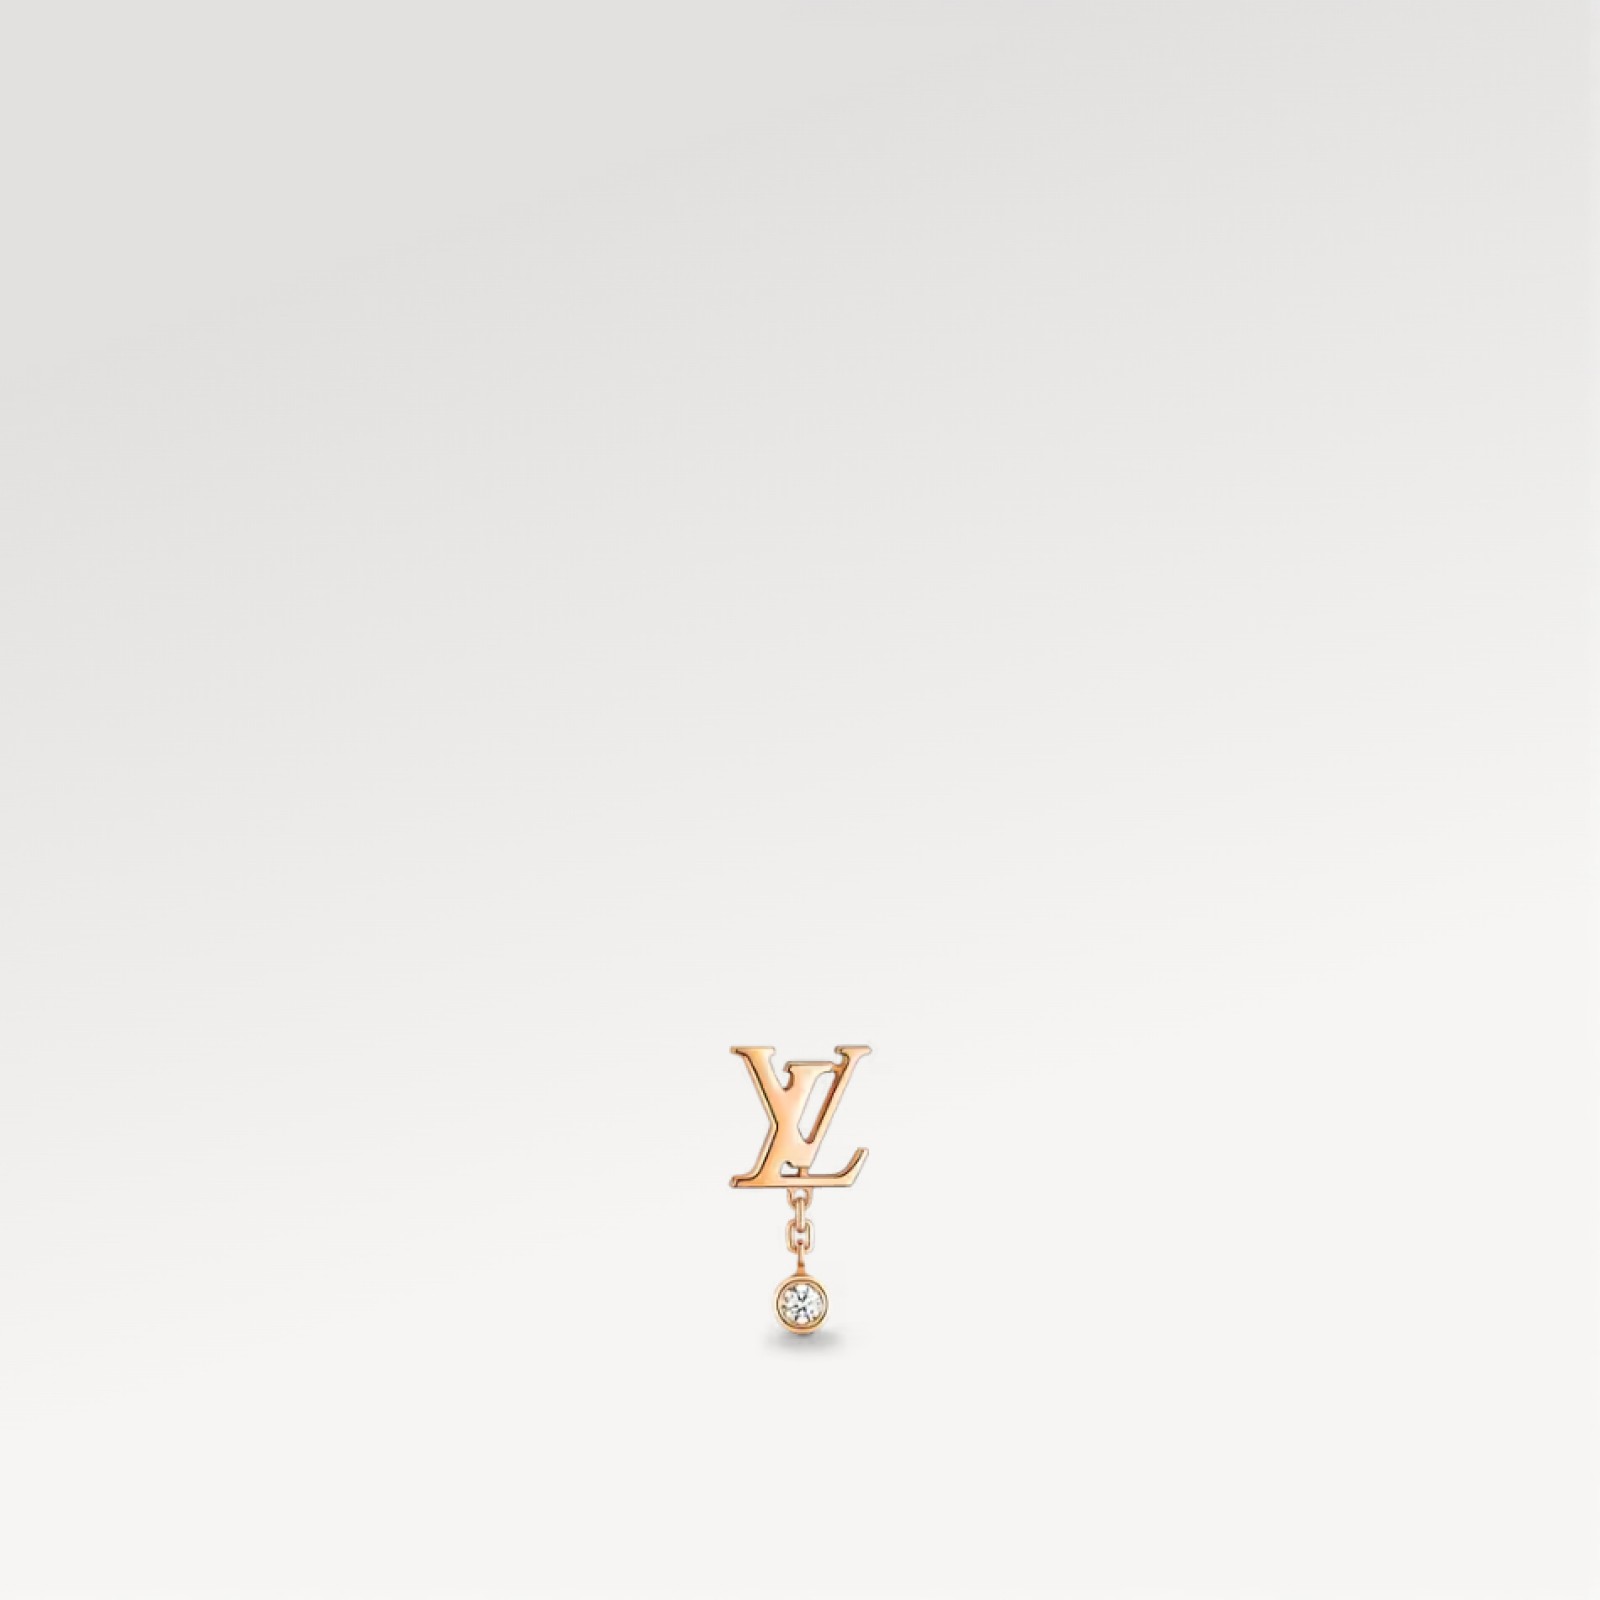 Idylle Blossom LV Ear Stud, Pink Gold And Diamond - Per Unit